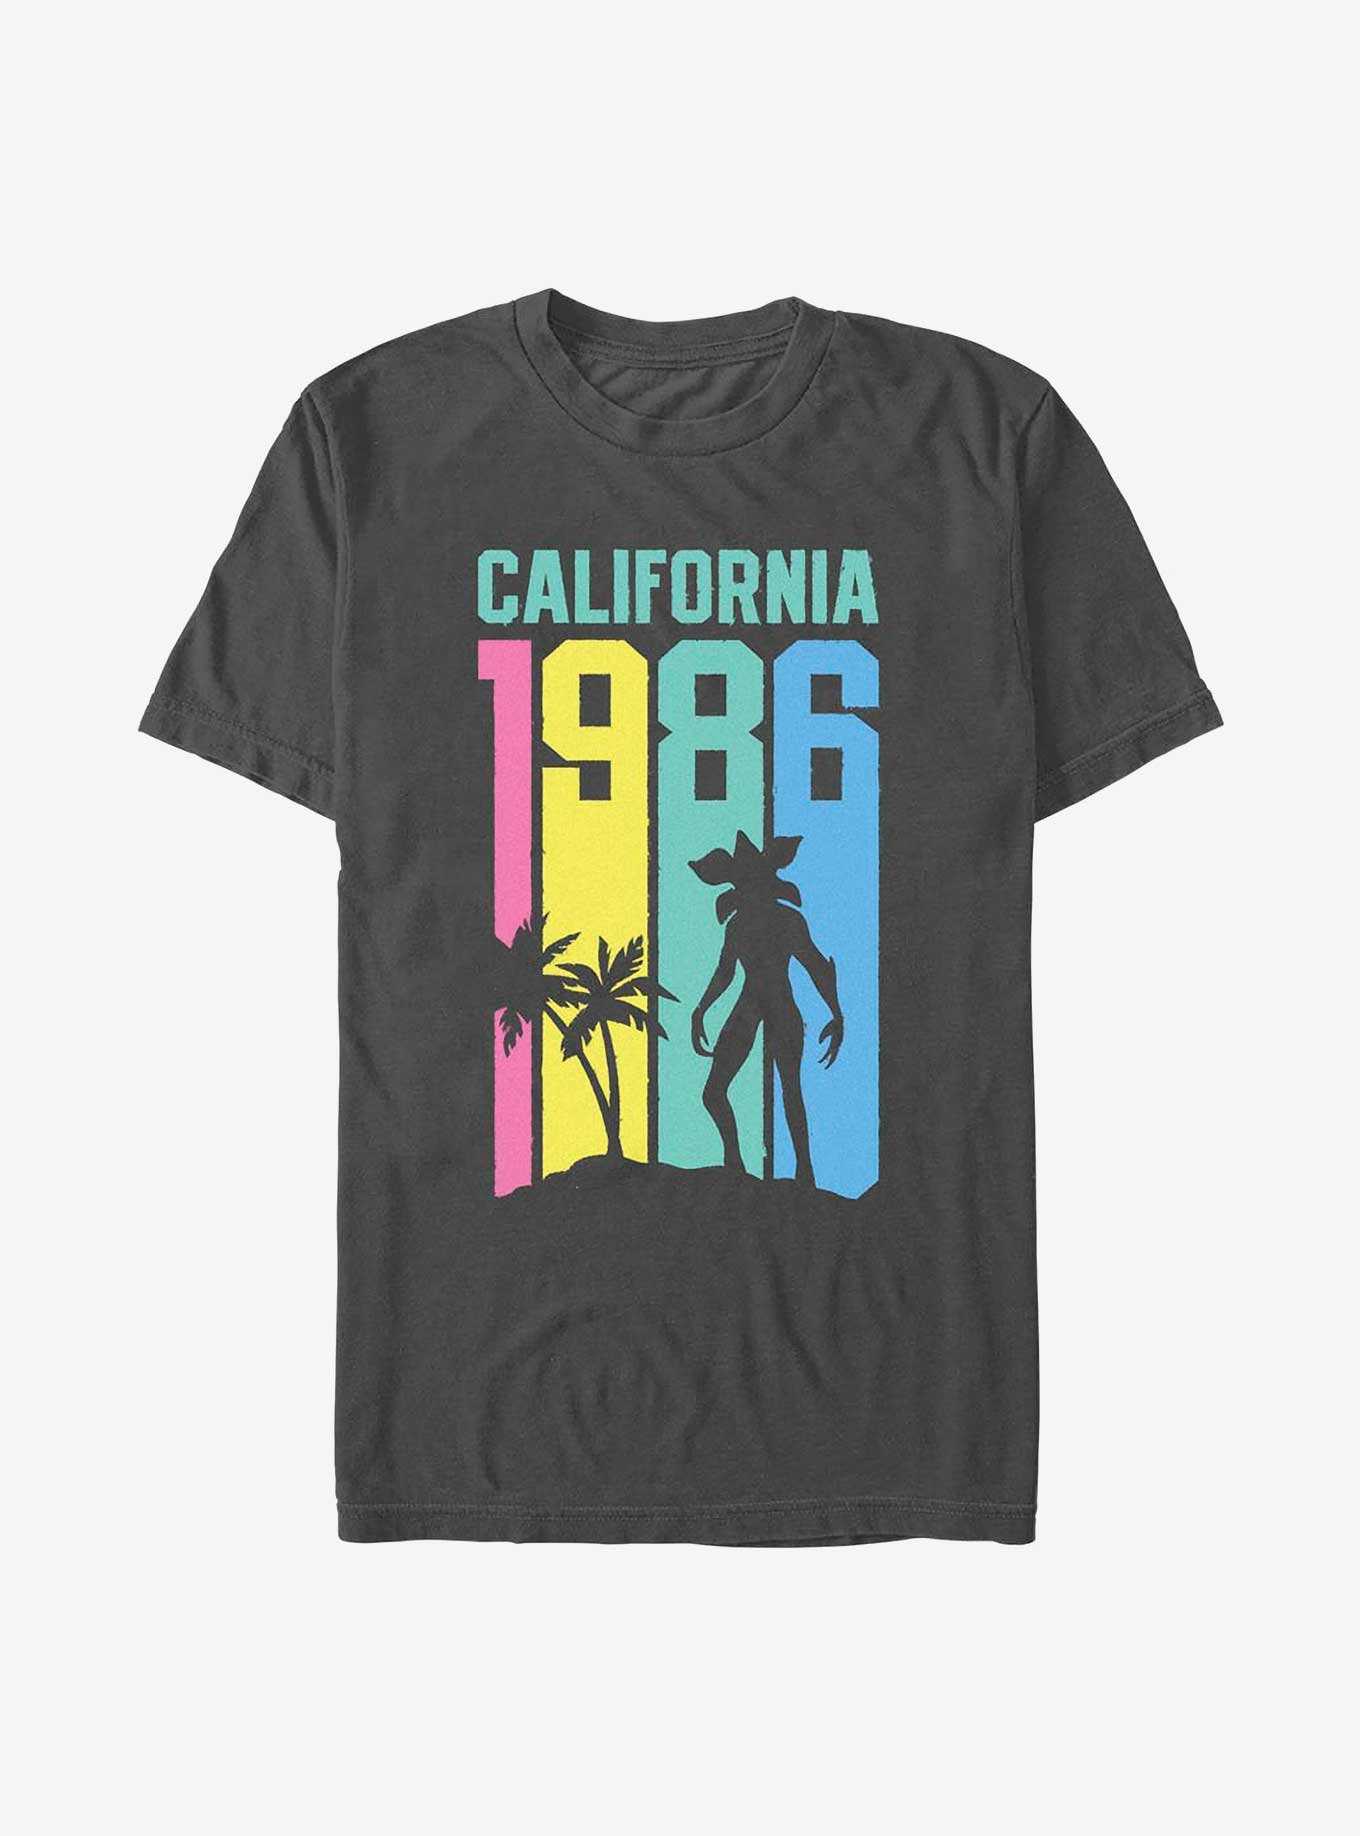 Stranger Things California Demogorgon T-Shirt, , hi-res